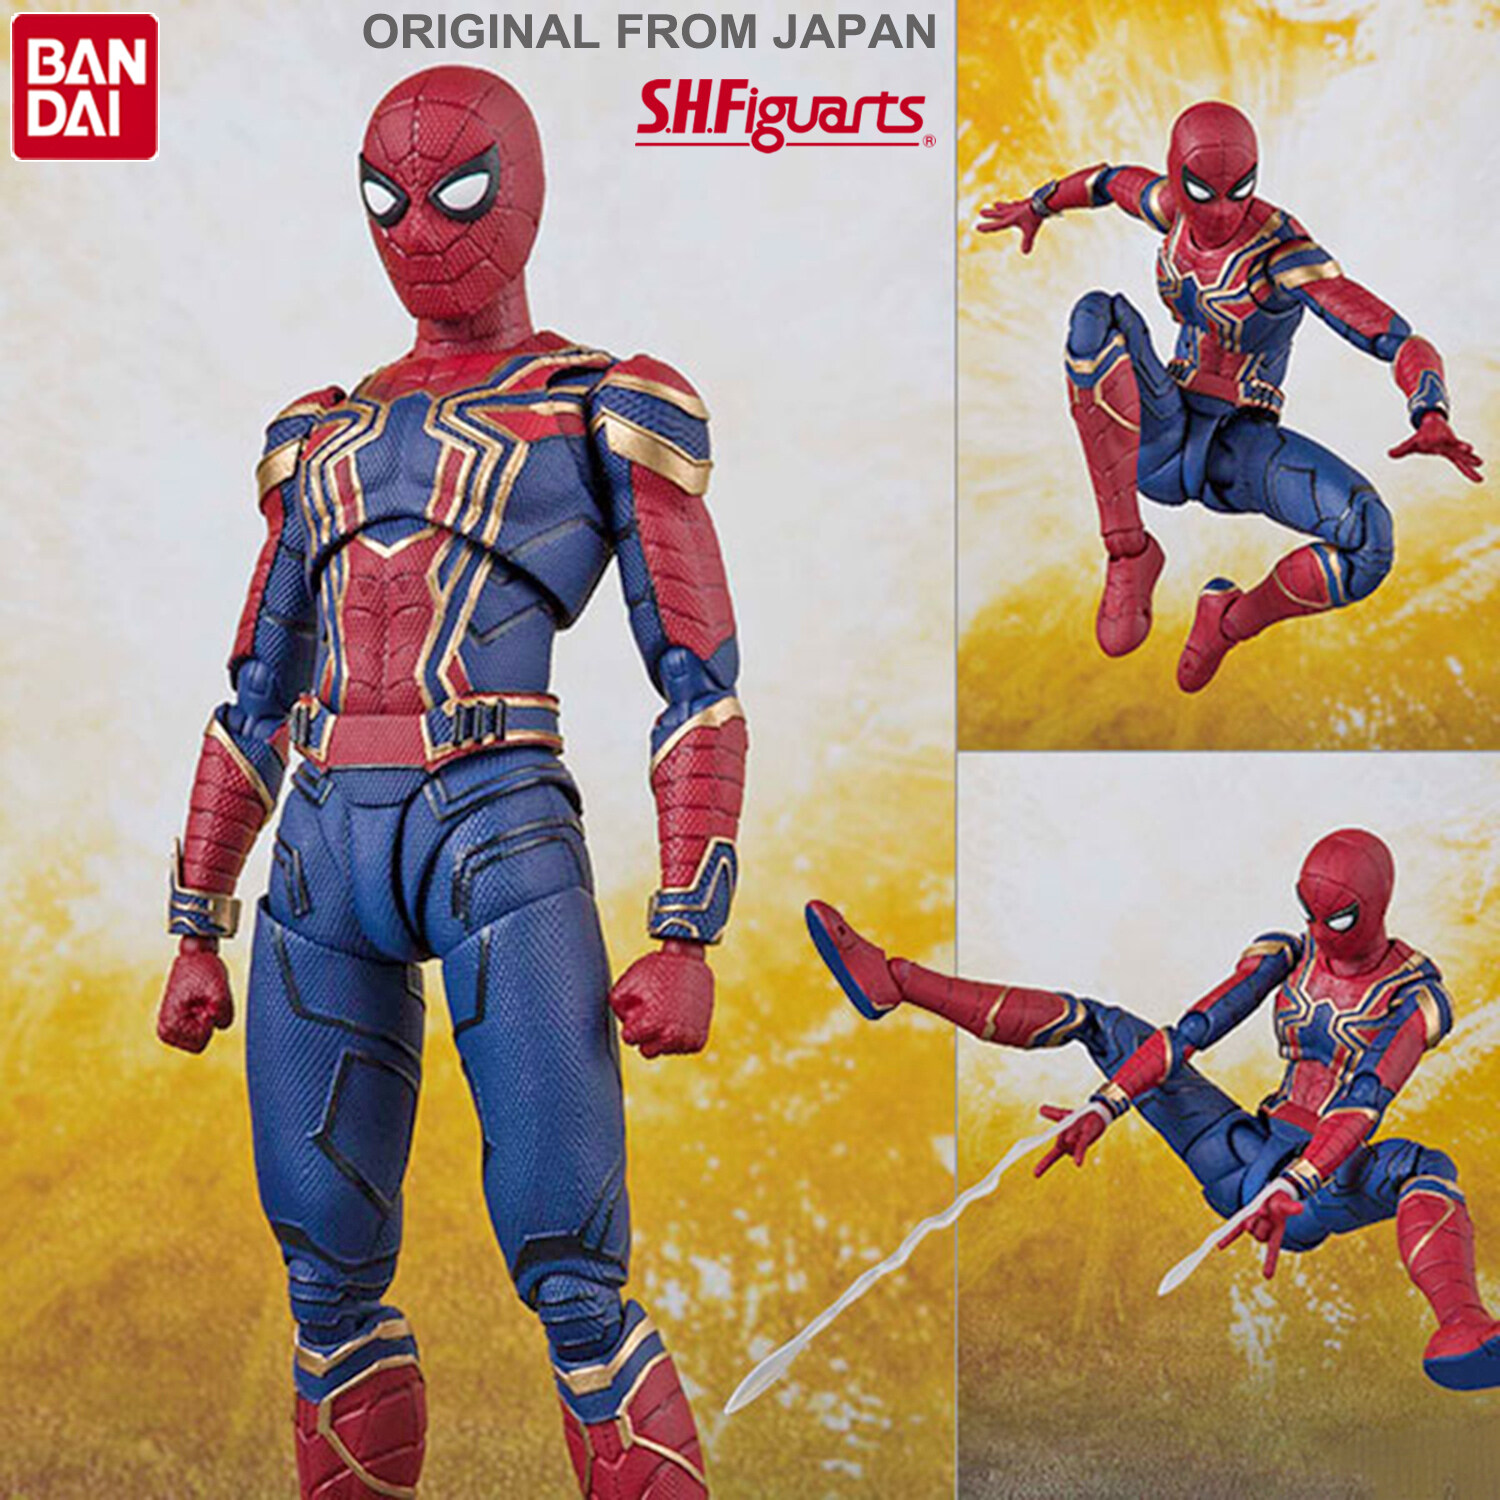 Model โมเดล ของแท้ 100ndai S.H.Figuarts Marvel Comics Avengers Infinity War อเวนเจอร์ส มหาสงครามล้างจักรวาล Iron Spider ไอรอนสไปเดอร์ Spider man สไปเดอร์ แมน Peter Parker ปีเตอร์ ปาร์คเกอร์ Ver Original from Japan Figma ฟิกม่า การ์ตูน ตุ๊กตา ฟิกเกอร์